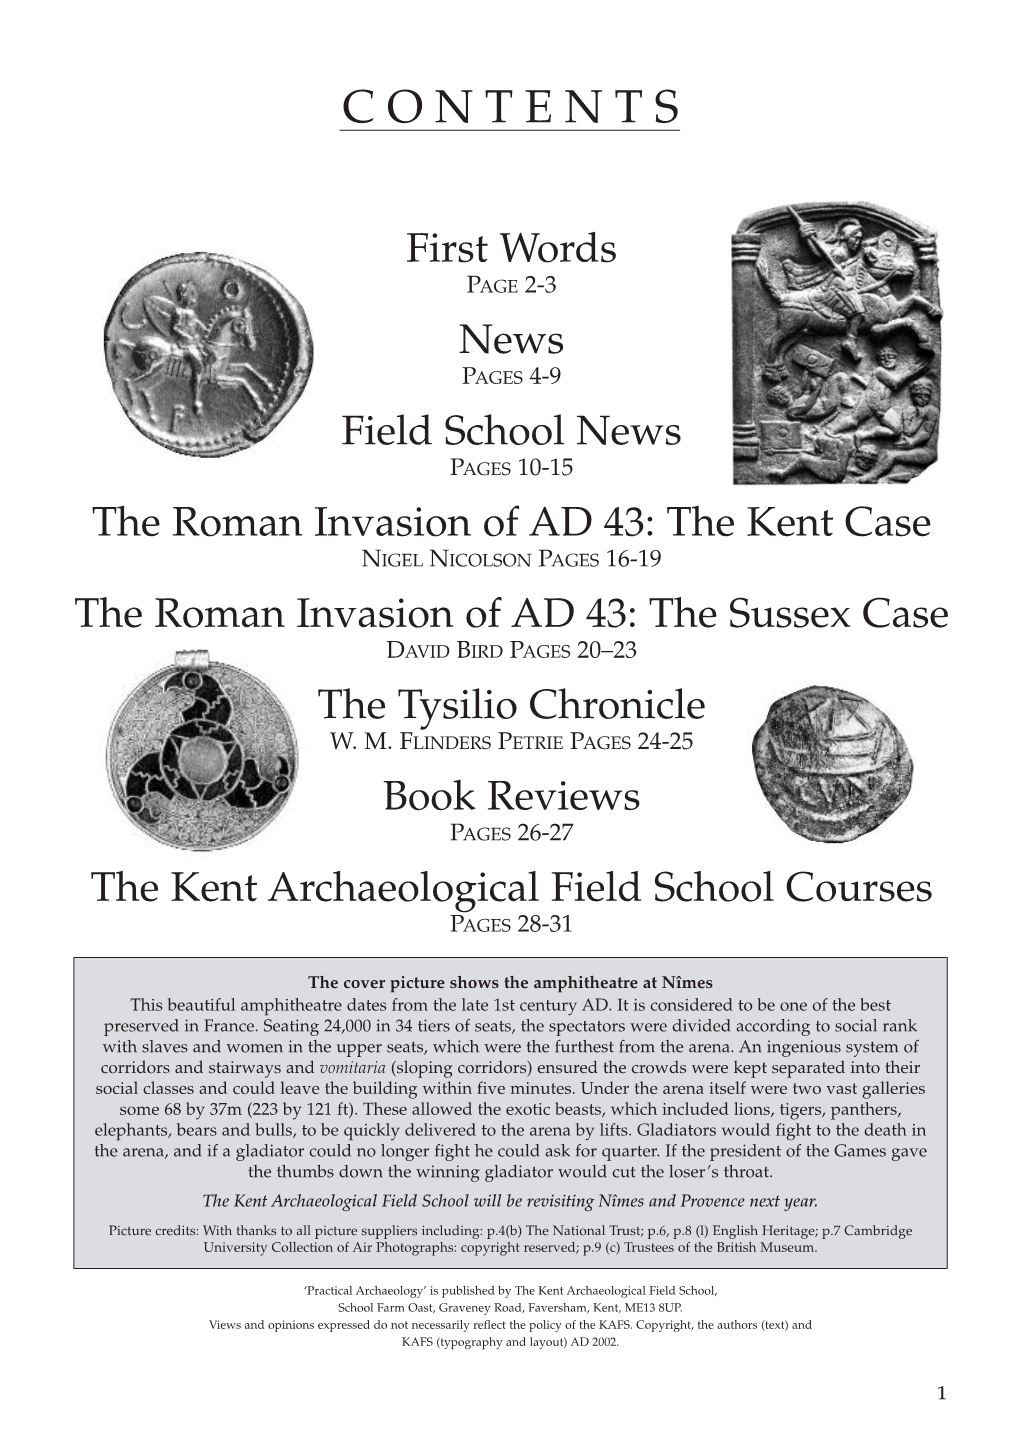 Practical Archaeology’ Is Published by the Kent Archaeological Field School, School Farm Oast, Graveney Road, Faversham, Kent, ME13 8UP